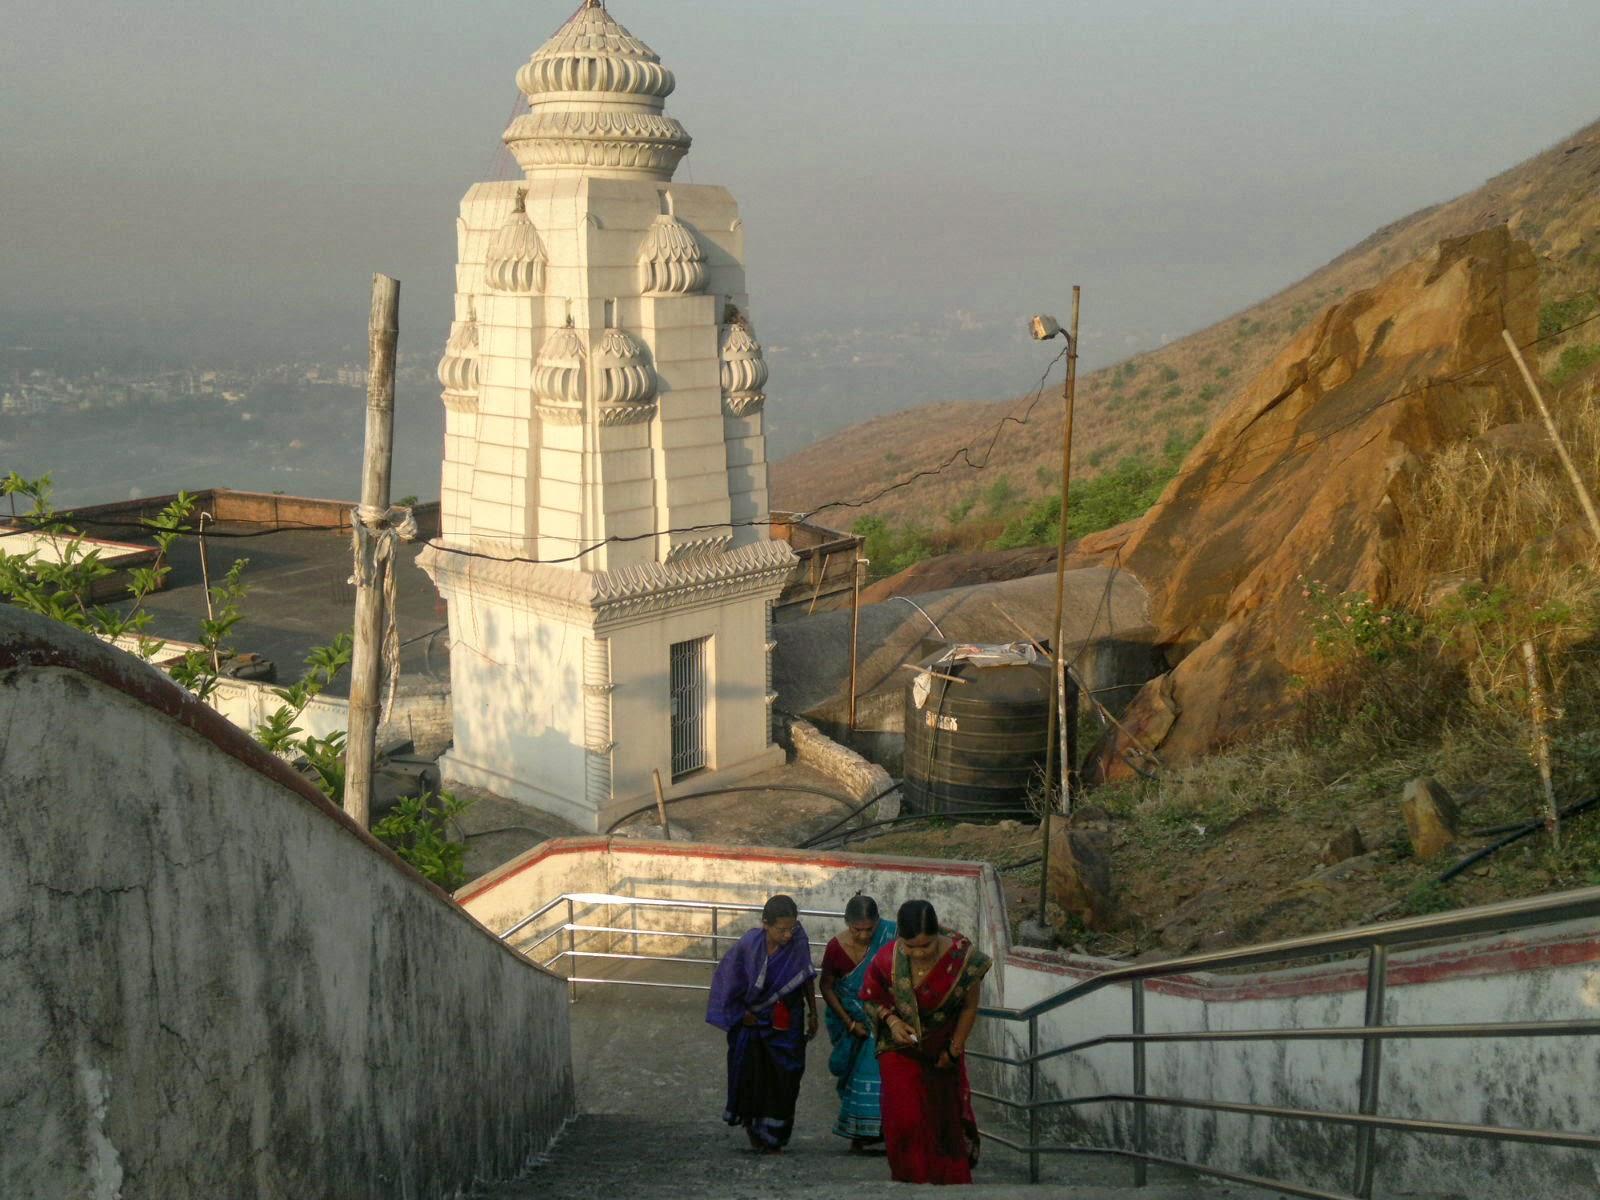 2014-03-30-2101_1-705174, Vaishnodevi Temple, Rourkela, Odisha